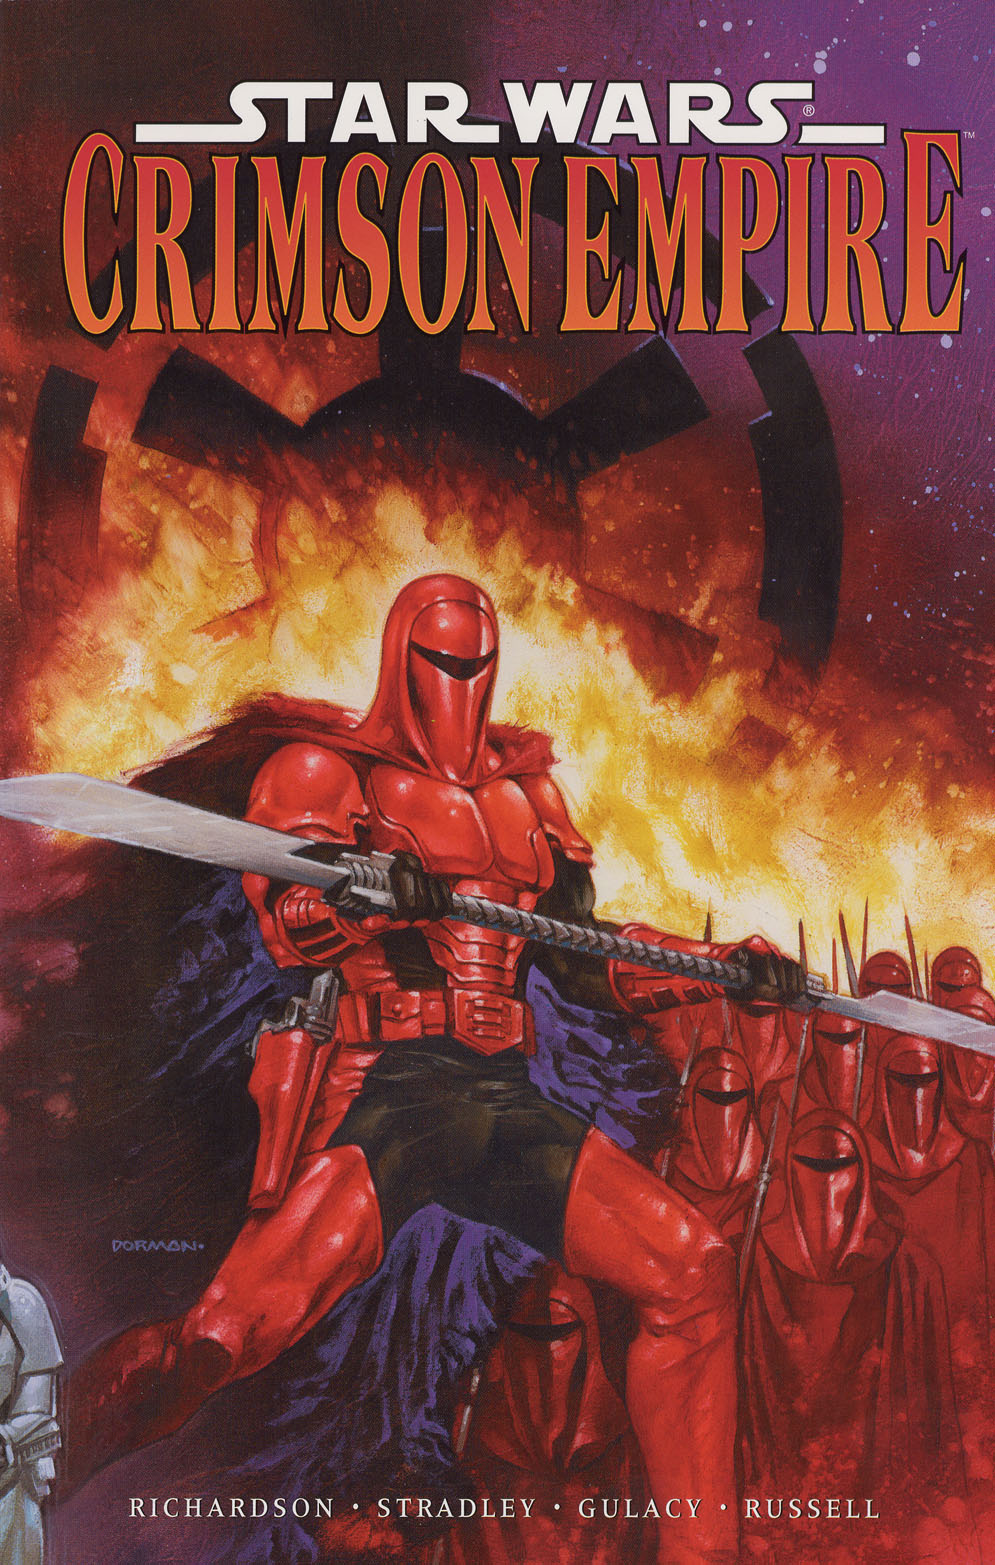 Okładka wydania oryginalnego - Crimson Empire.